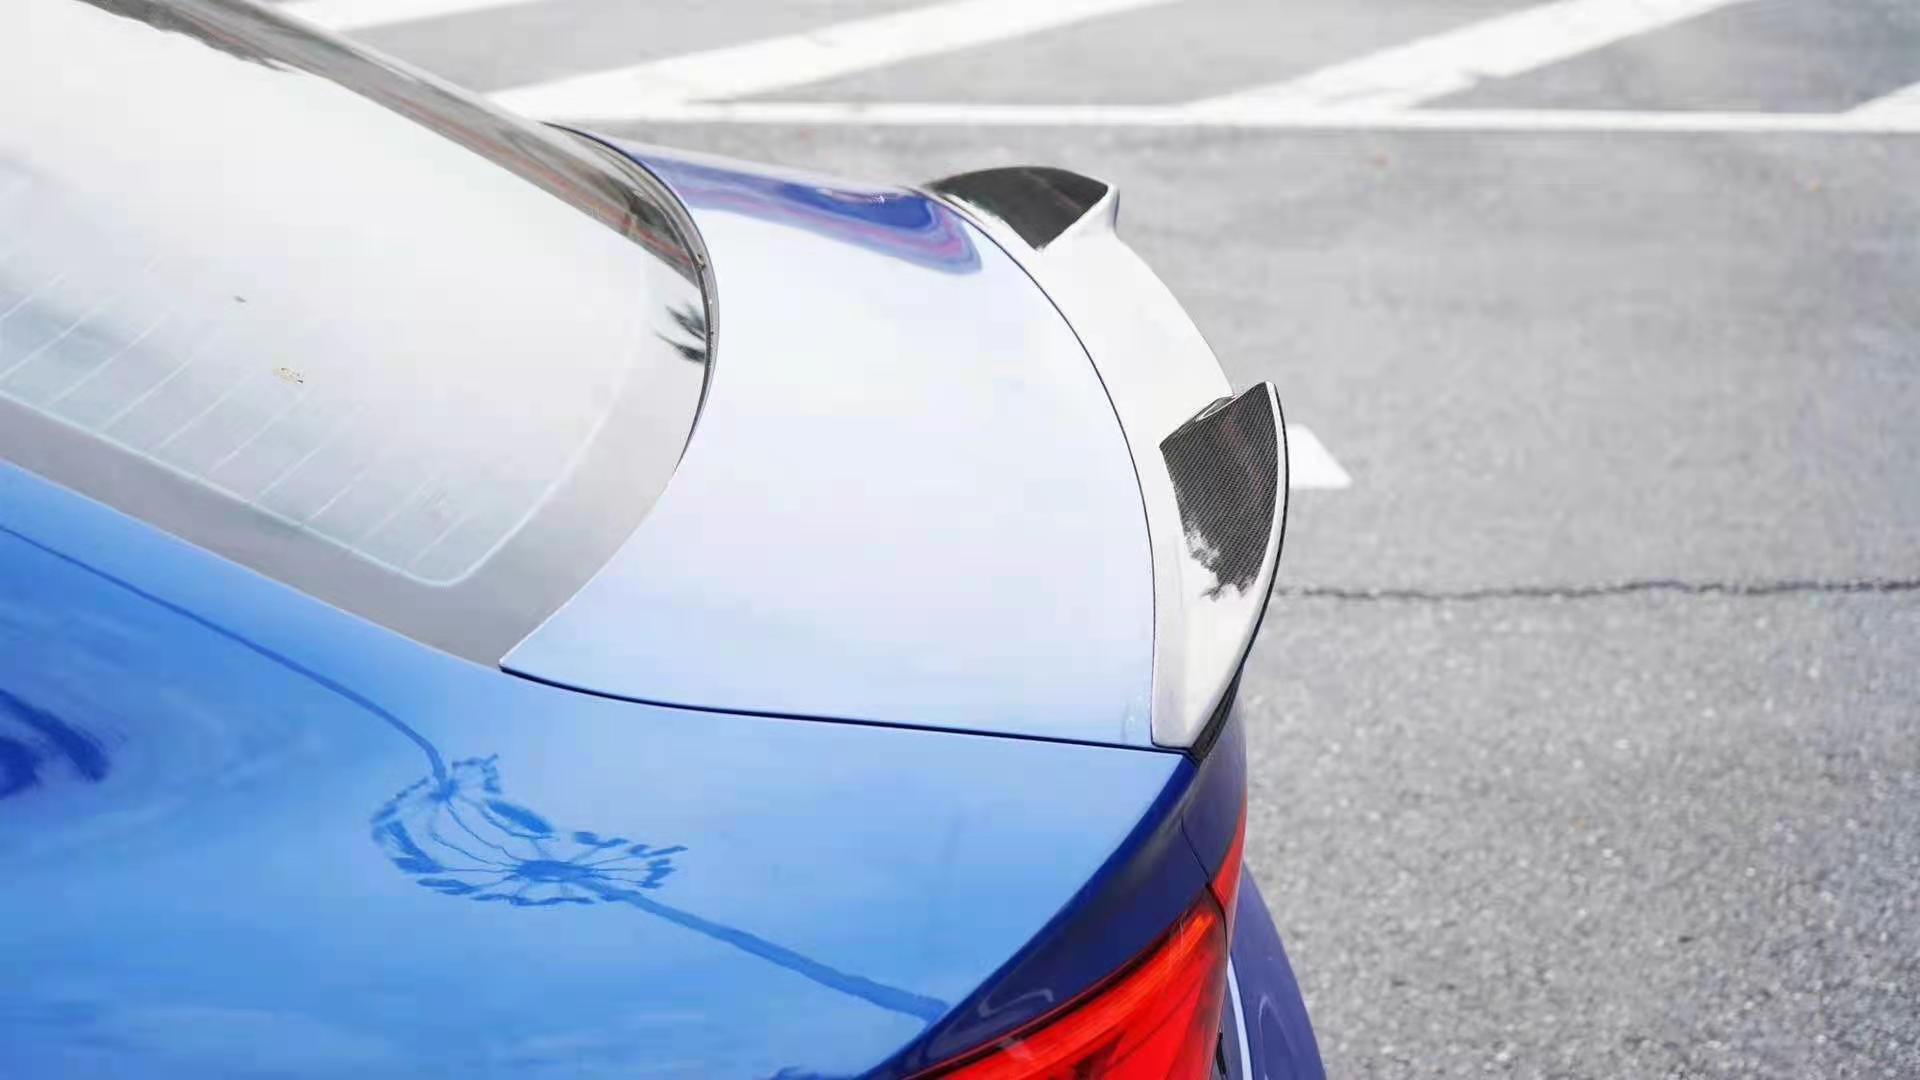 Check our price and buy Karbel Carbon Fiber Body kit set for Audi RS3 FL